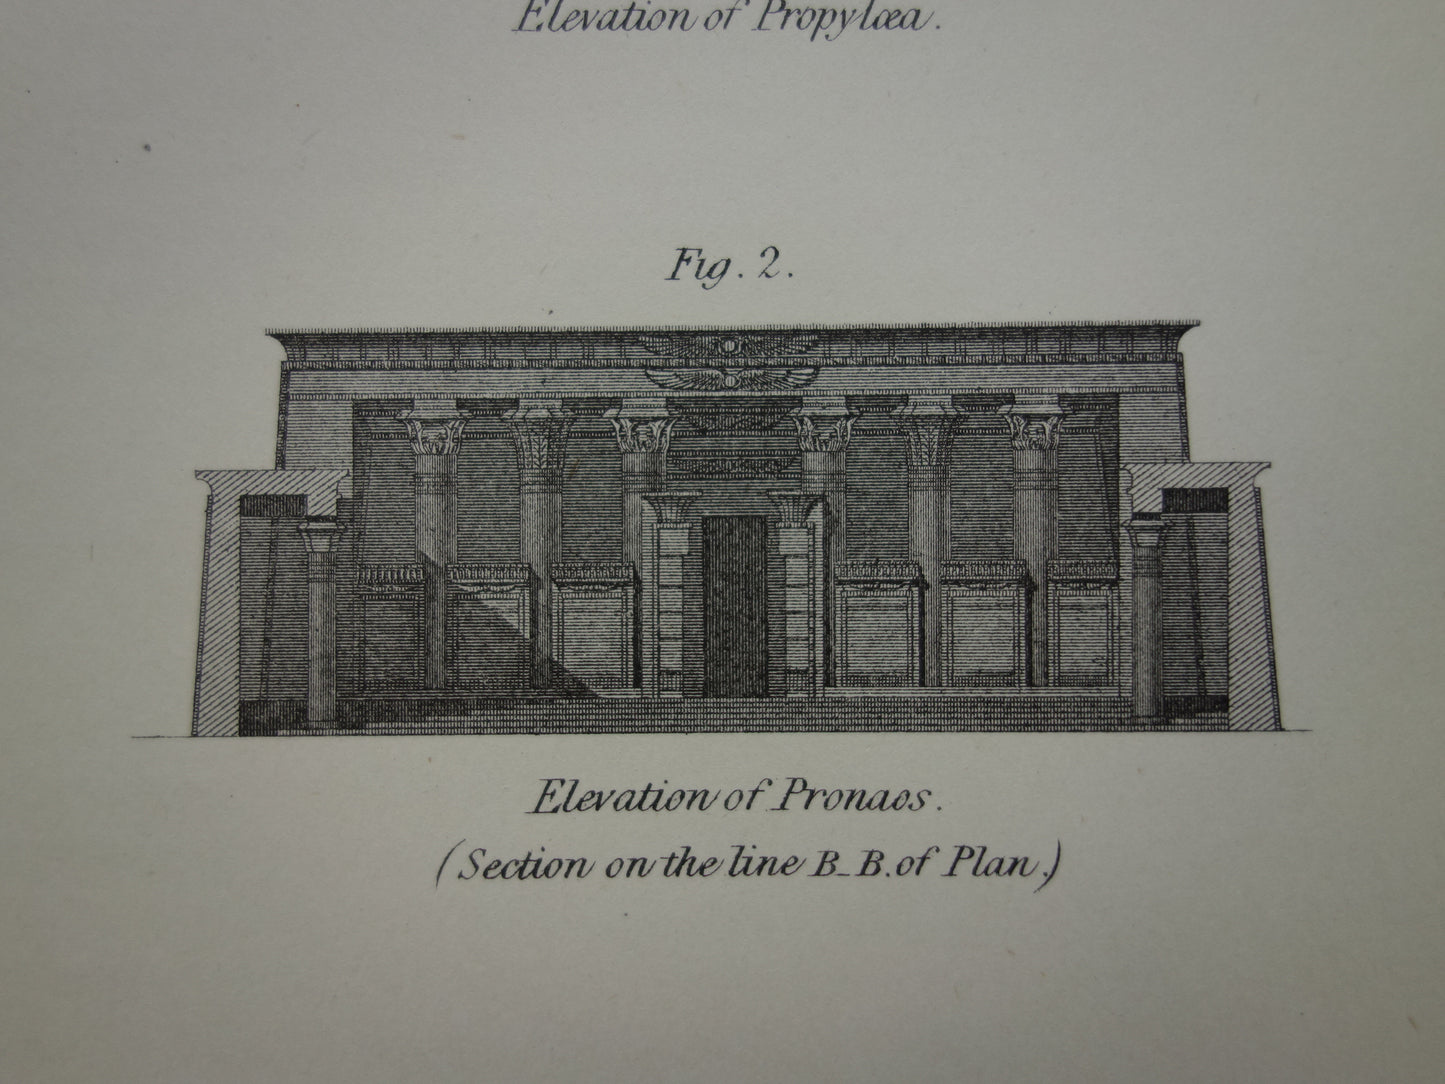 Oude prent Edfu Tempel van Horus in Egypte Antieke Architectuur Print Engelse illustratie